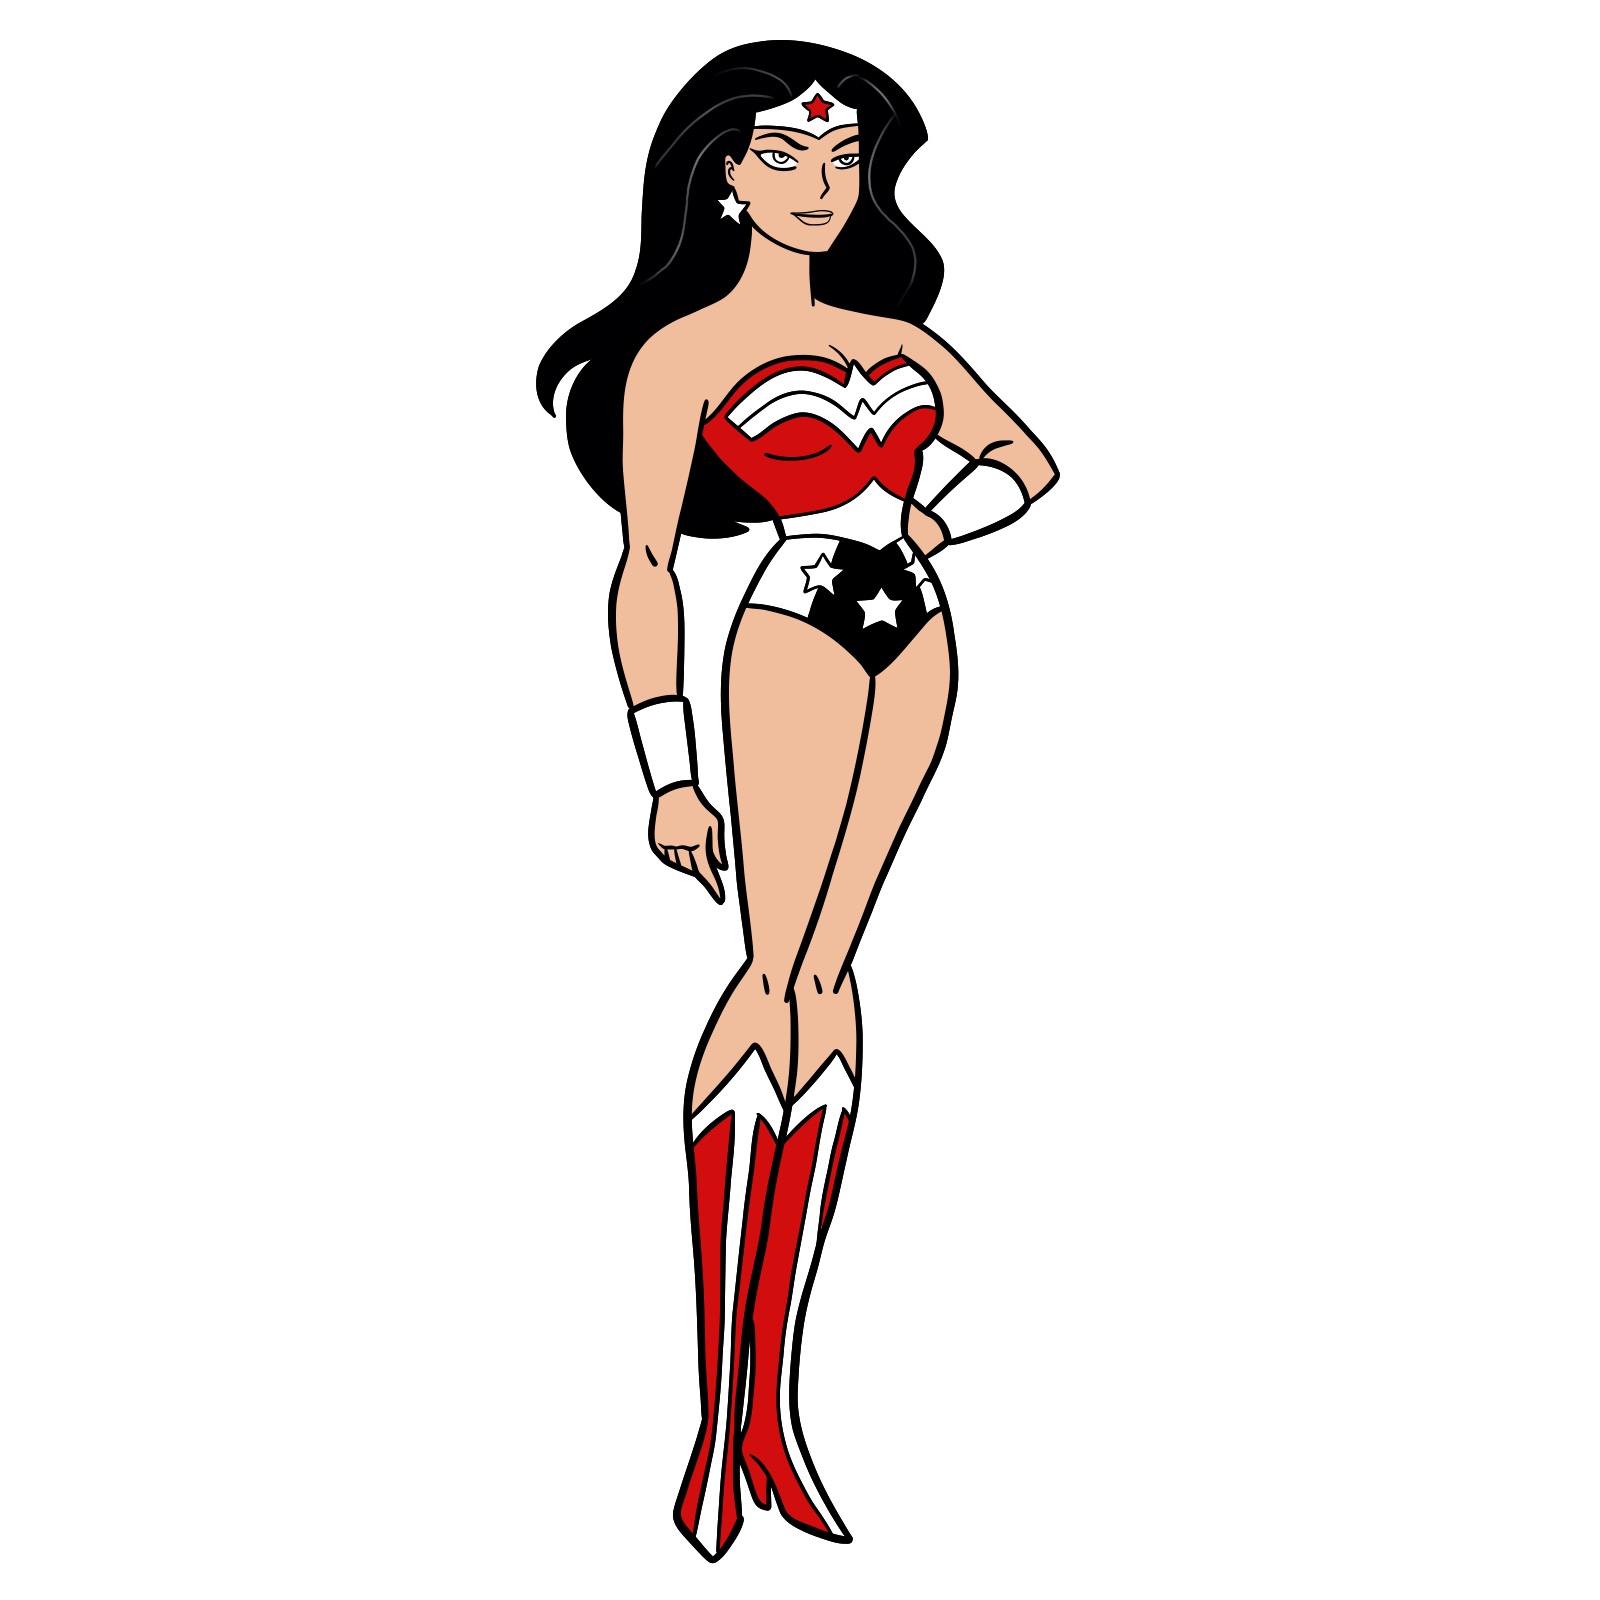 How to draw Wonder Woman cartoon style - step 35